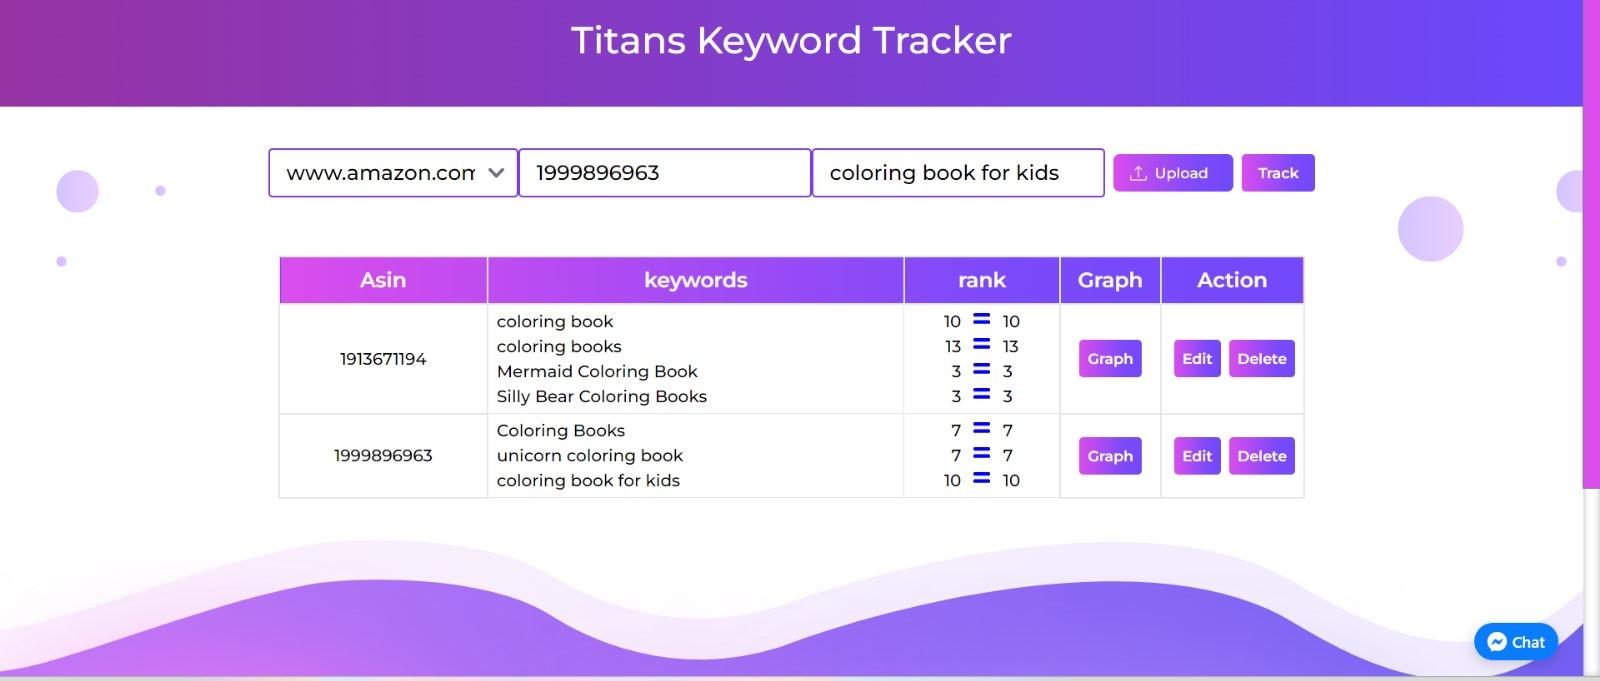 Titans Keyword Tracker